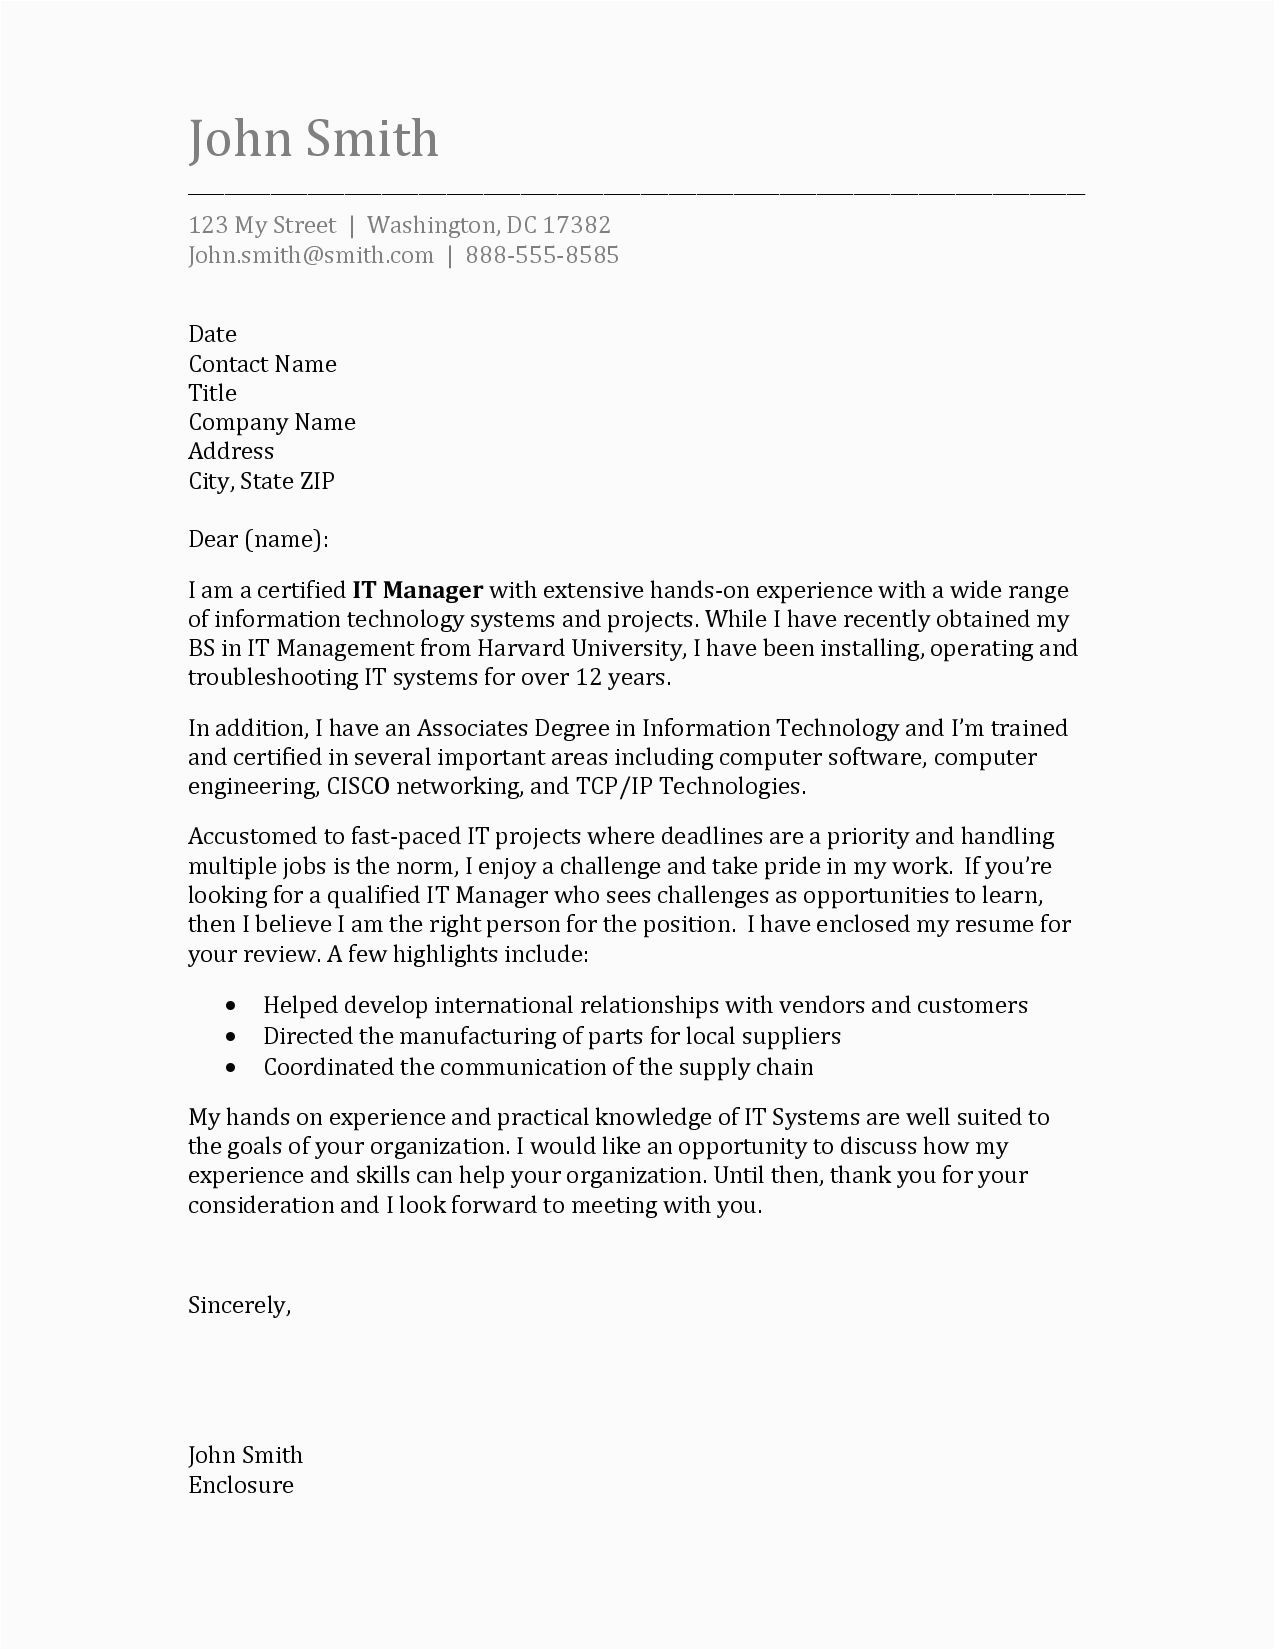 Sample Of Cover Letter for Resume at Harvard Cover Letter Template Harvard Resume format